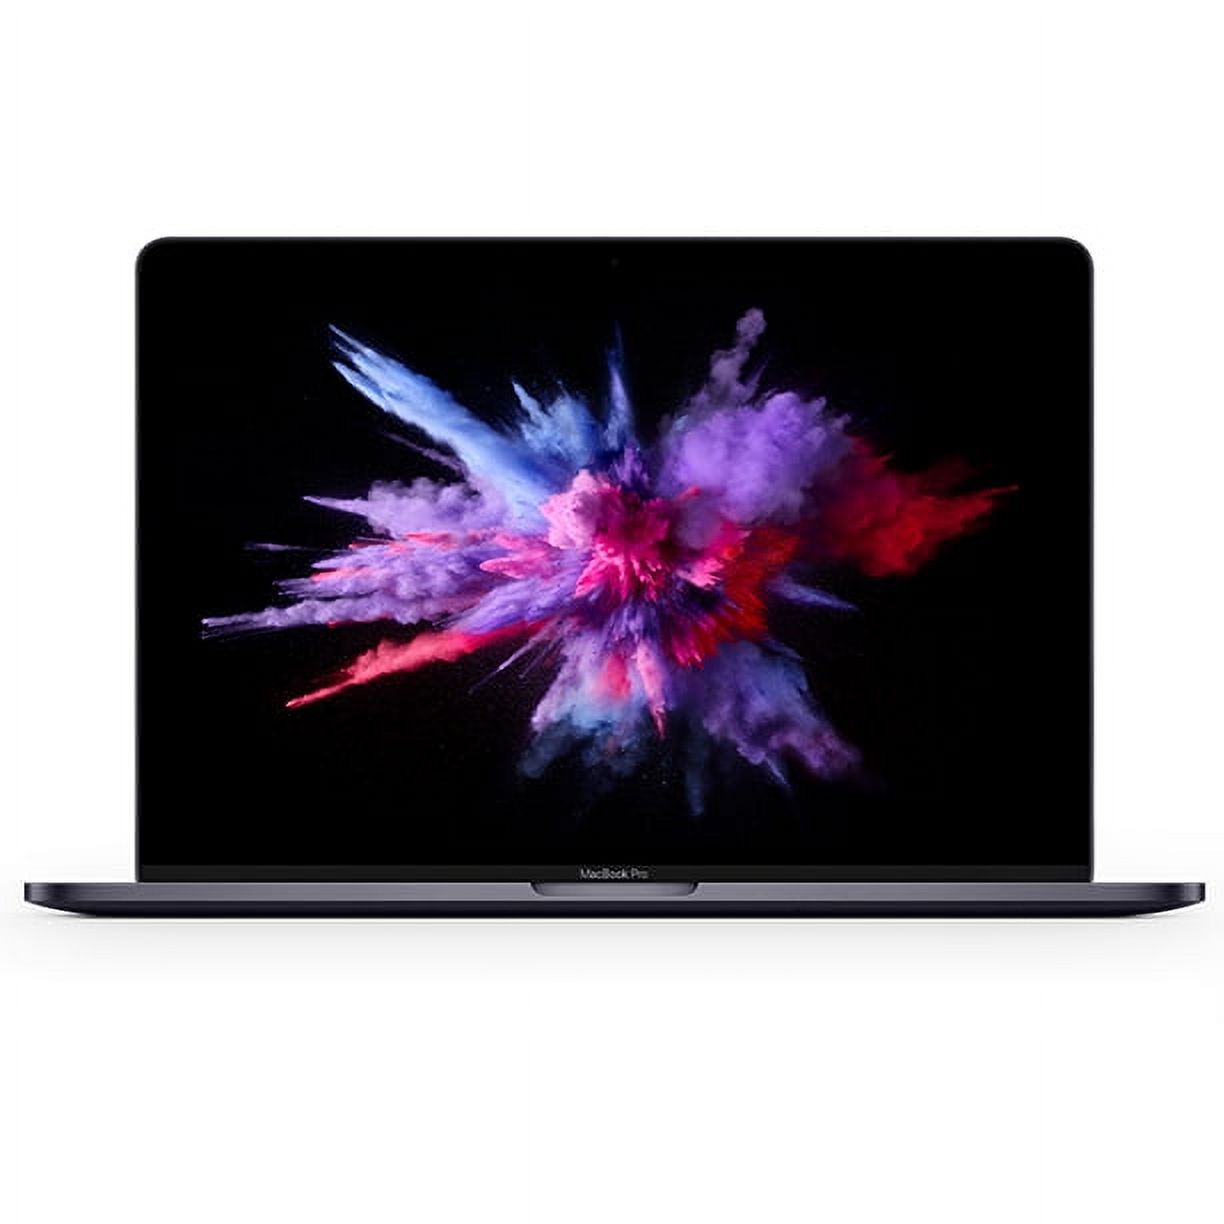 Apple MacBook Pro Laptop, 13.3\" Retina Display, Intel Core i5, 256GB SSD, Mac OS Sierra, MPXT2B/A. Pre-Owned: Like New - image 1 of 5